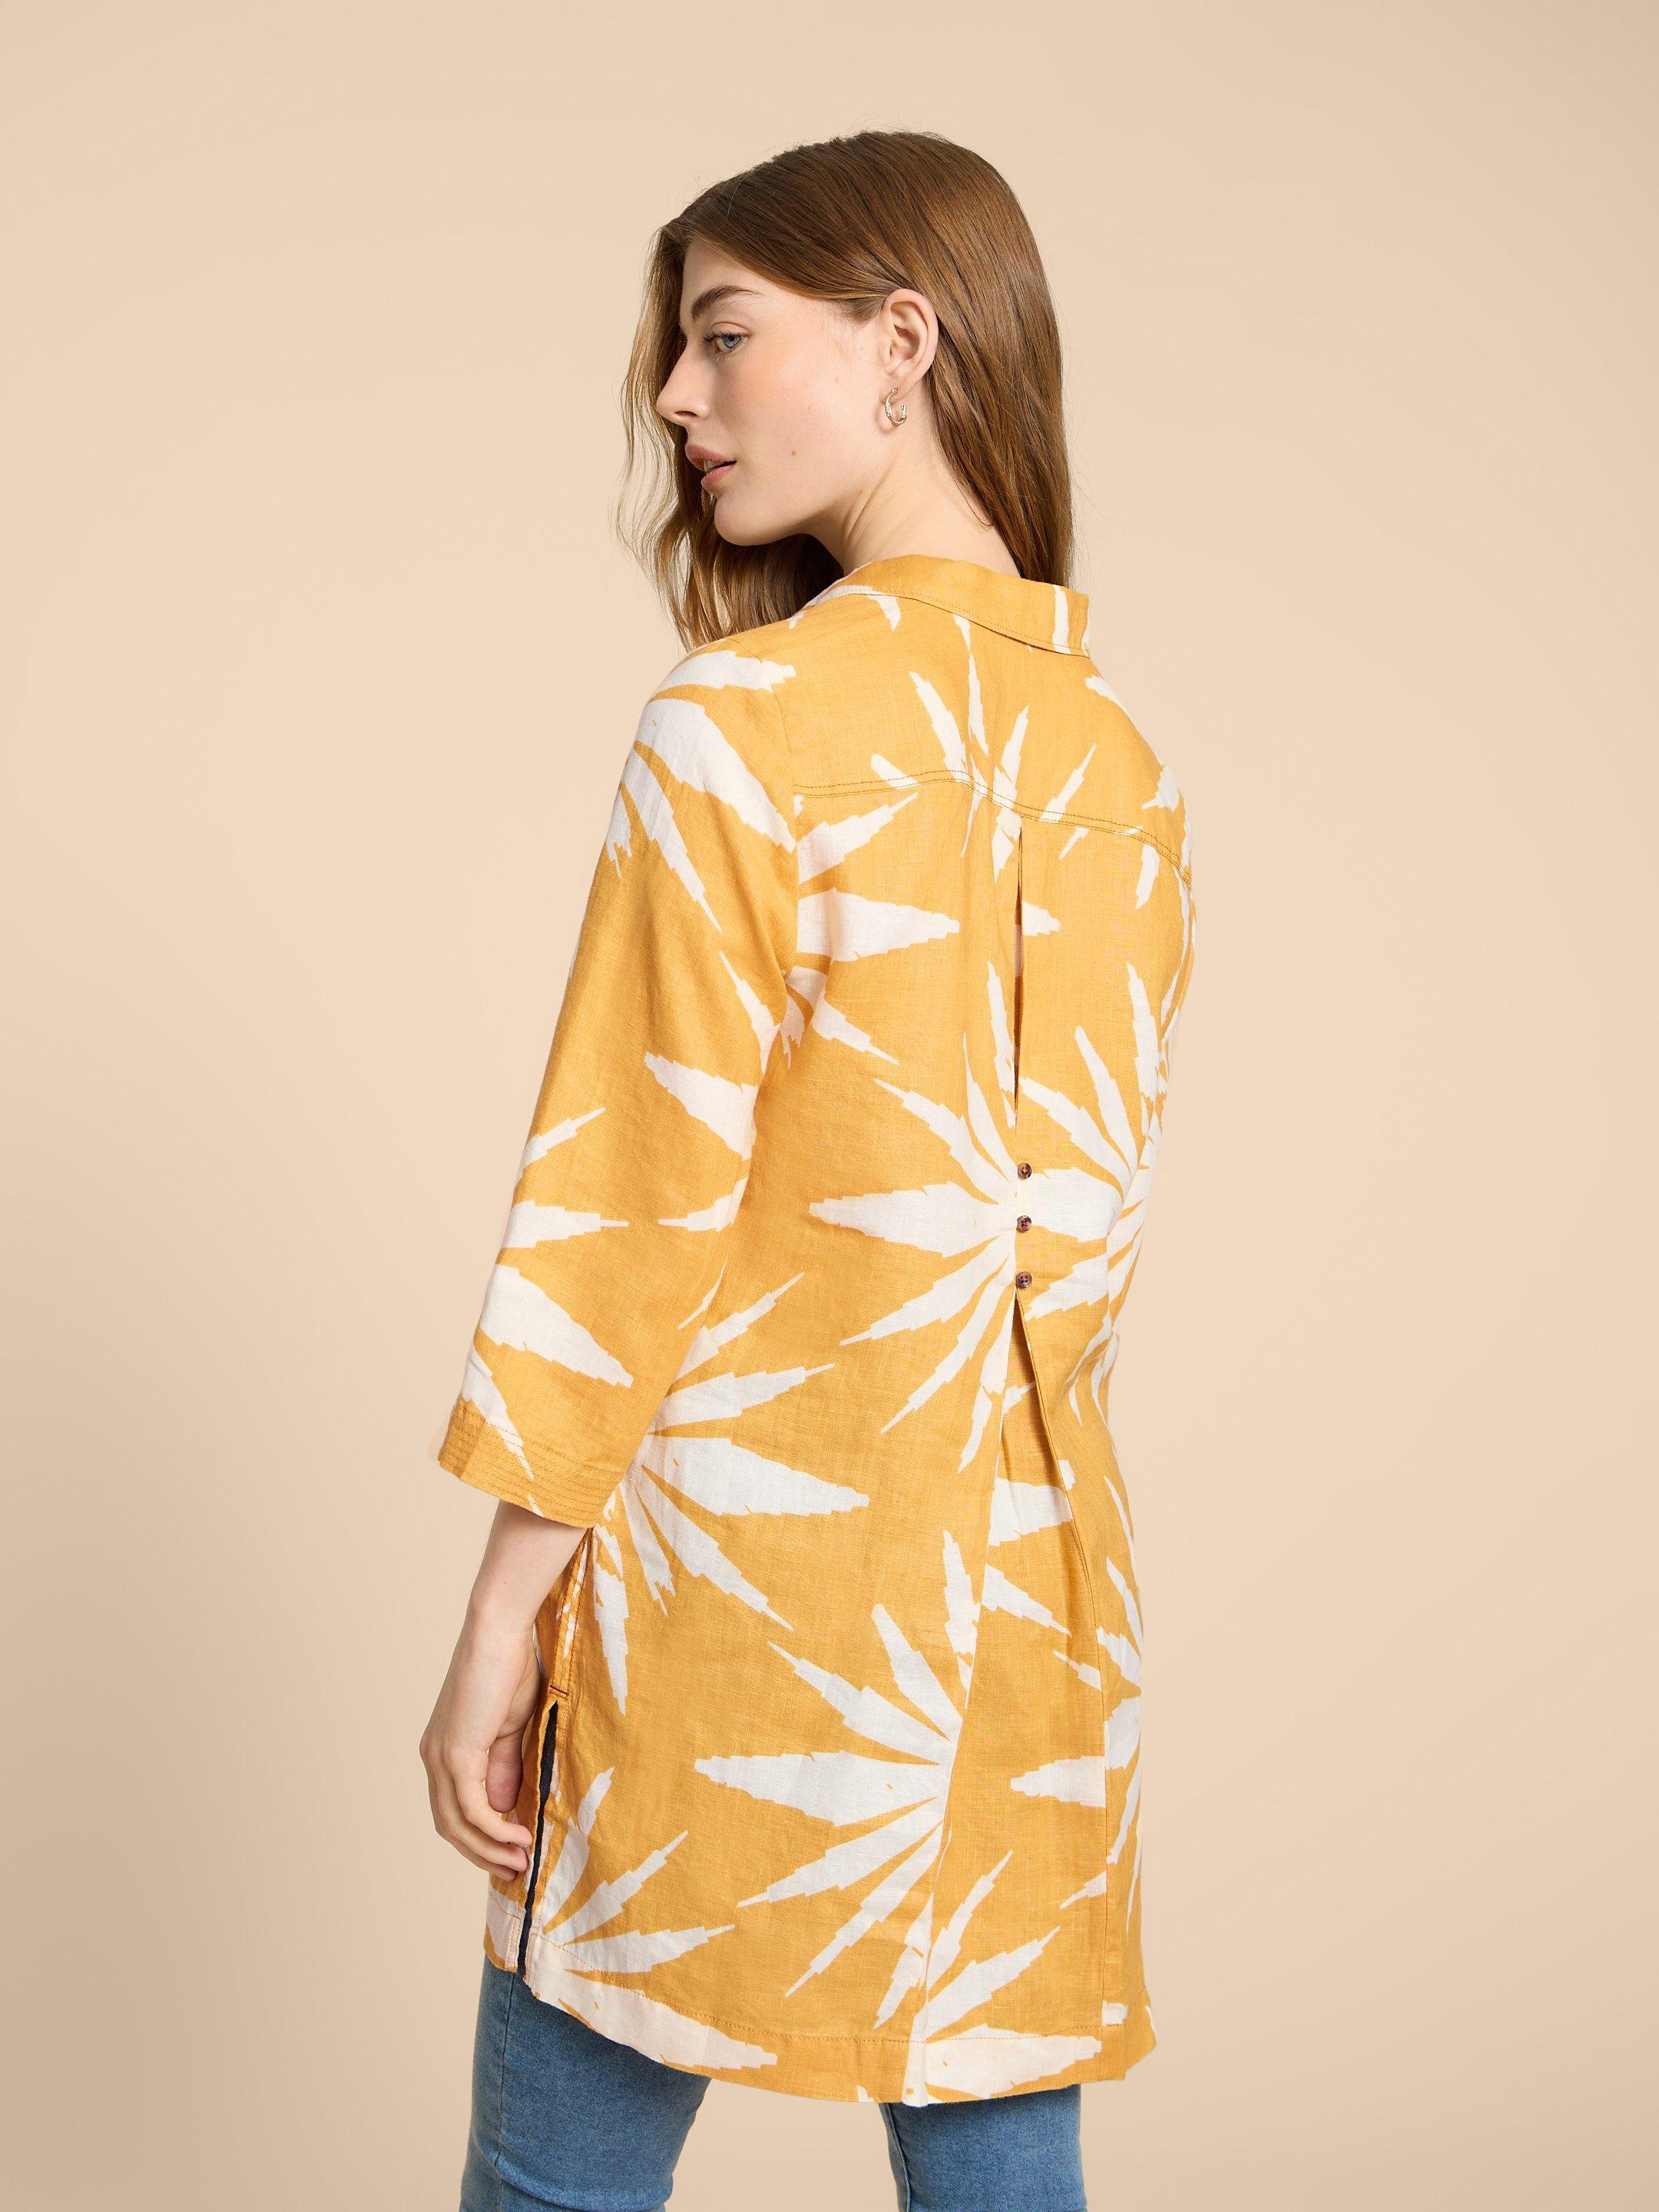 Blaire Linen Tunic in CHART PR - MODEL BACK